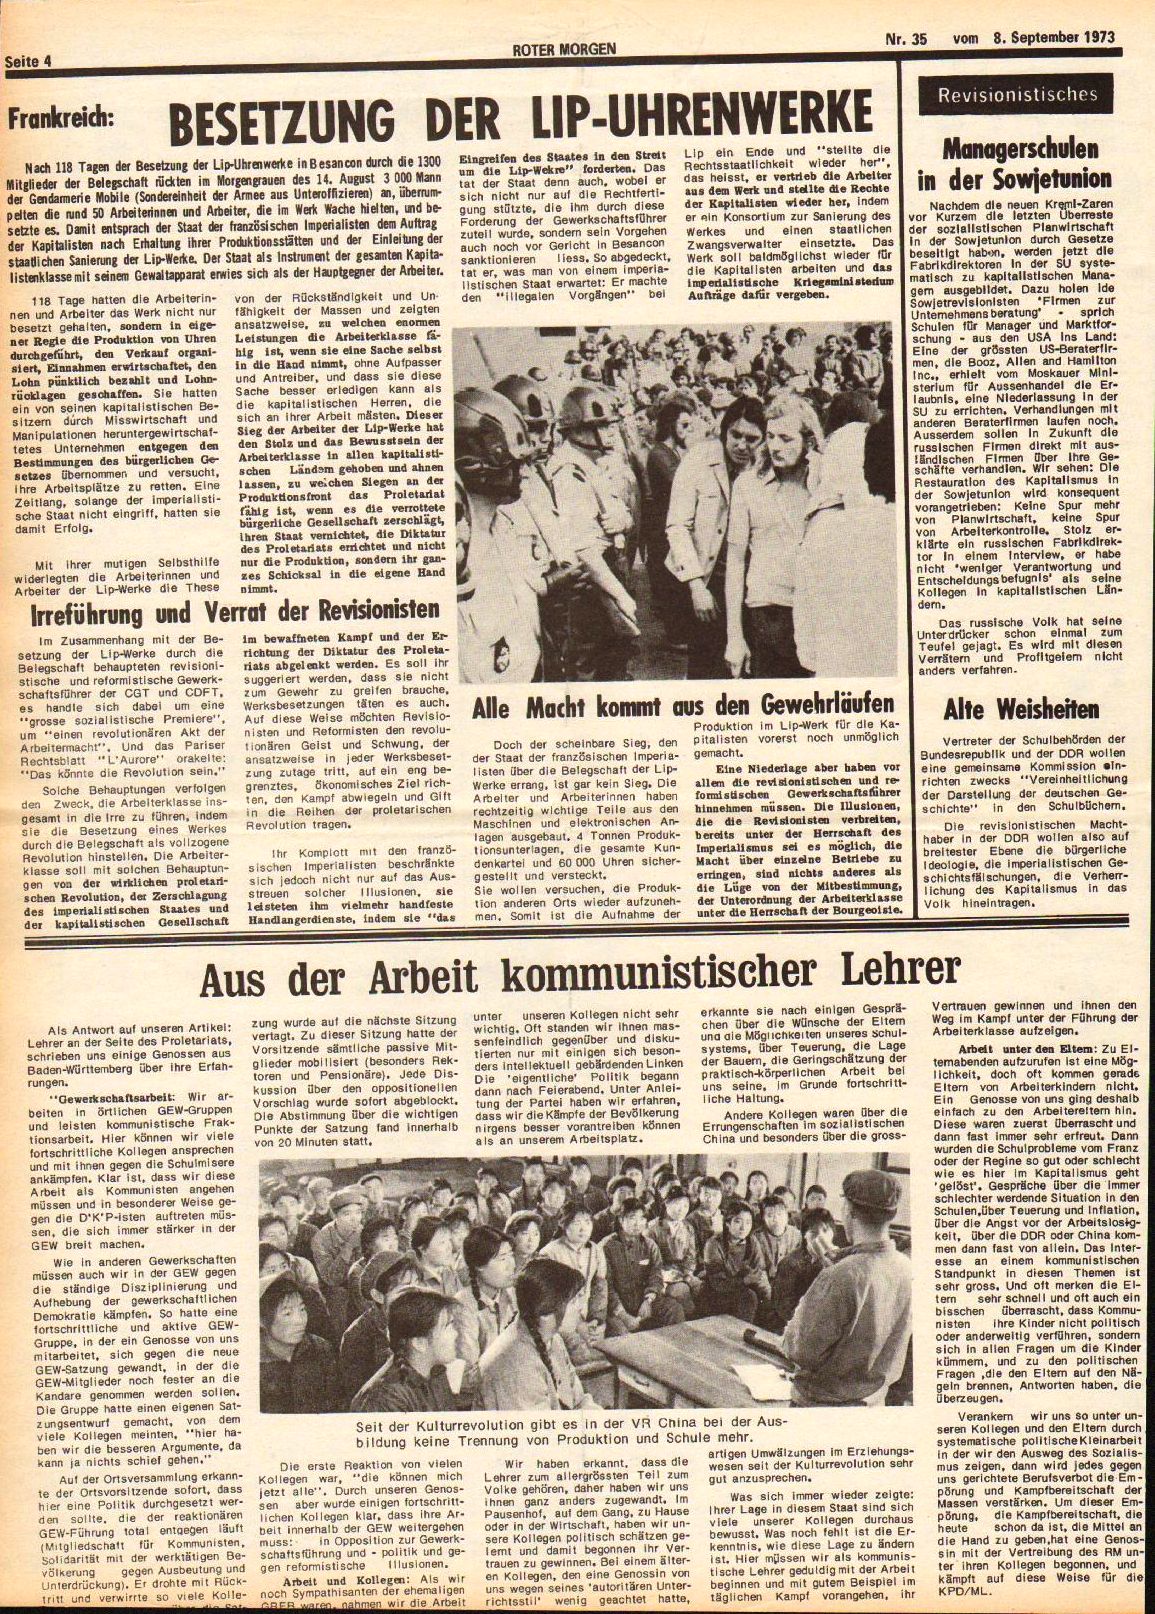 Roter Morgen, 7. Jg., 8. September 1973, Nr. 35, Seite 4